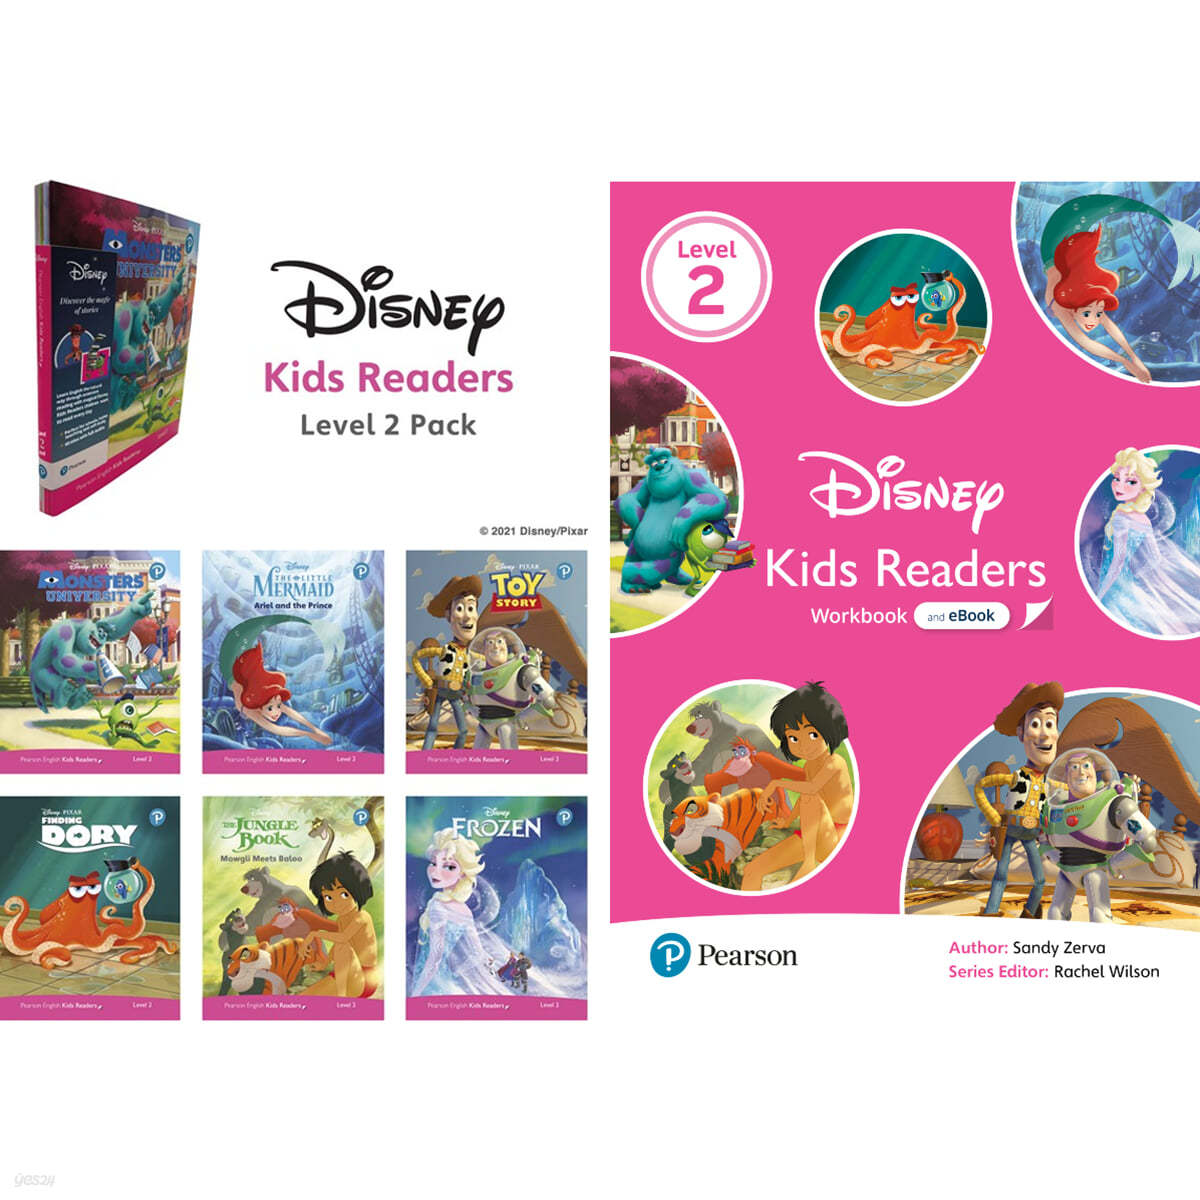 Disney Kids Readers Level 2 세트 (Pack + Workbook)